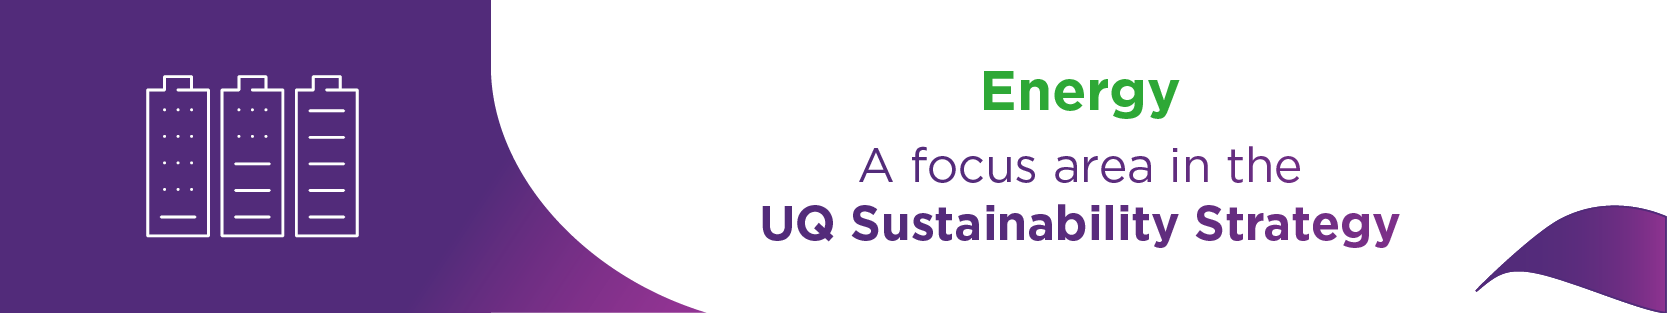 https://sustainability.uq.edu.au/files/31762/SustStrat%20banner%20-%20energy.png